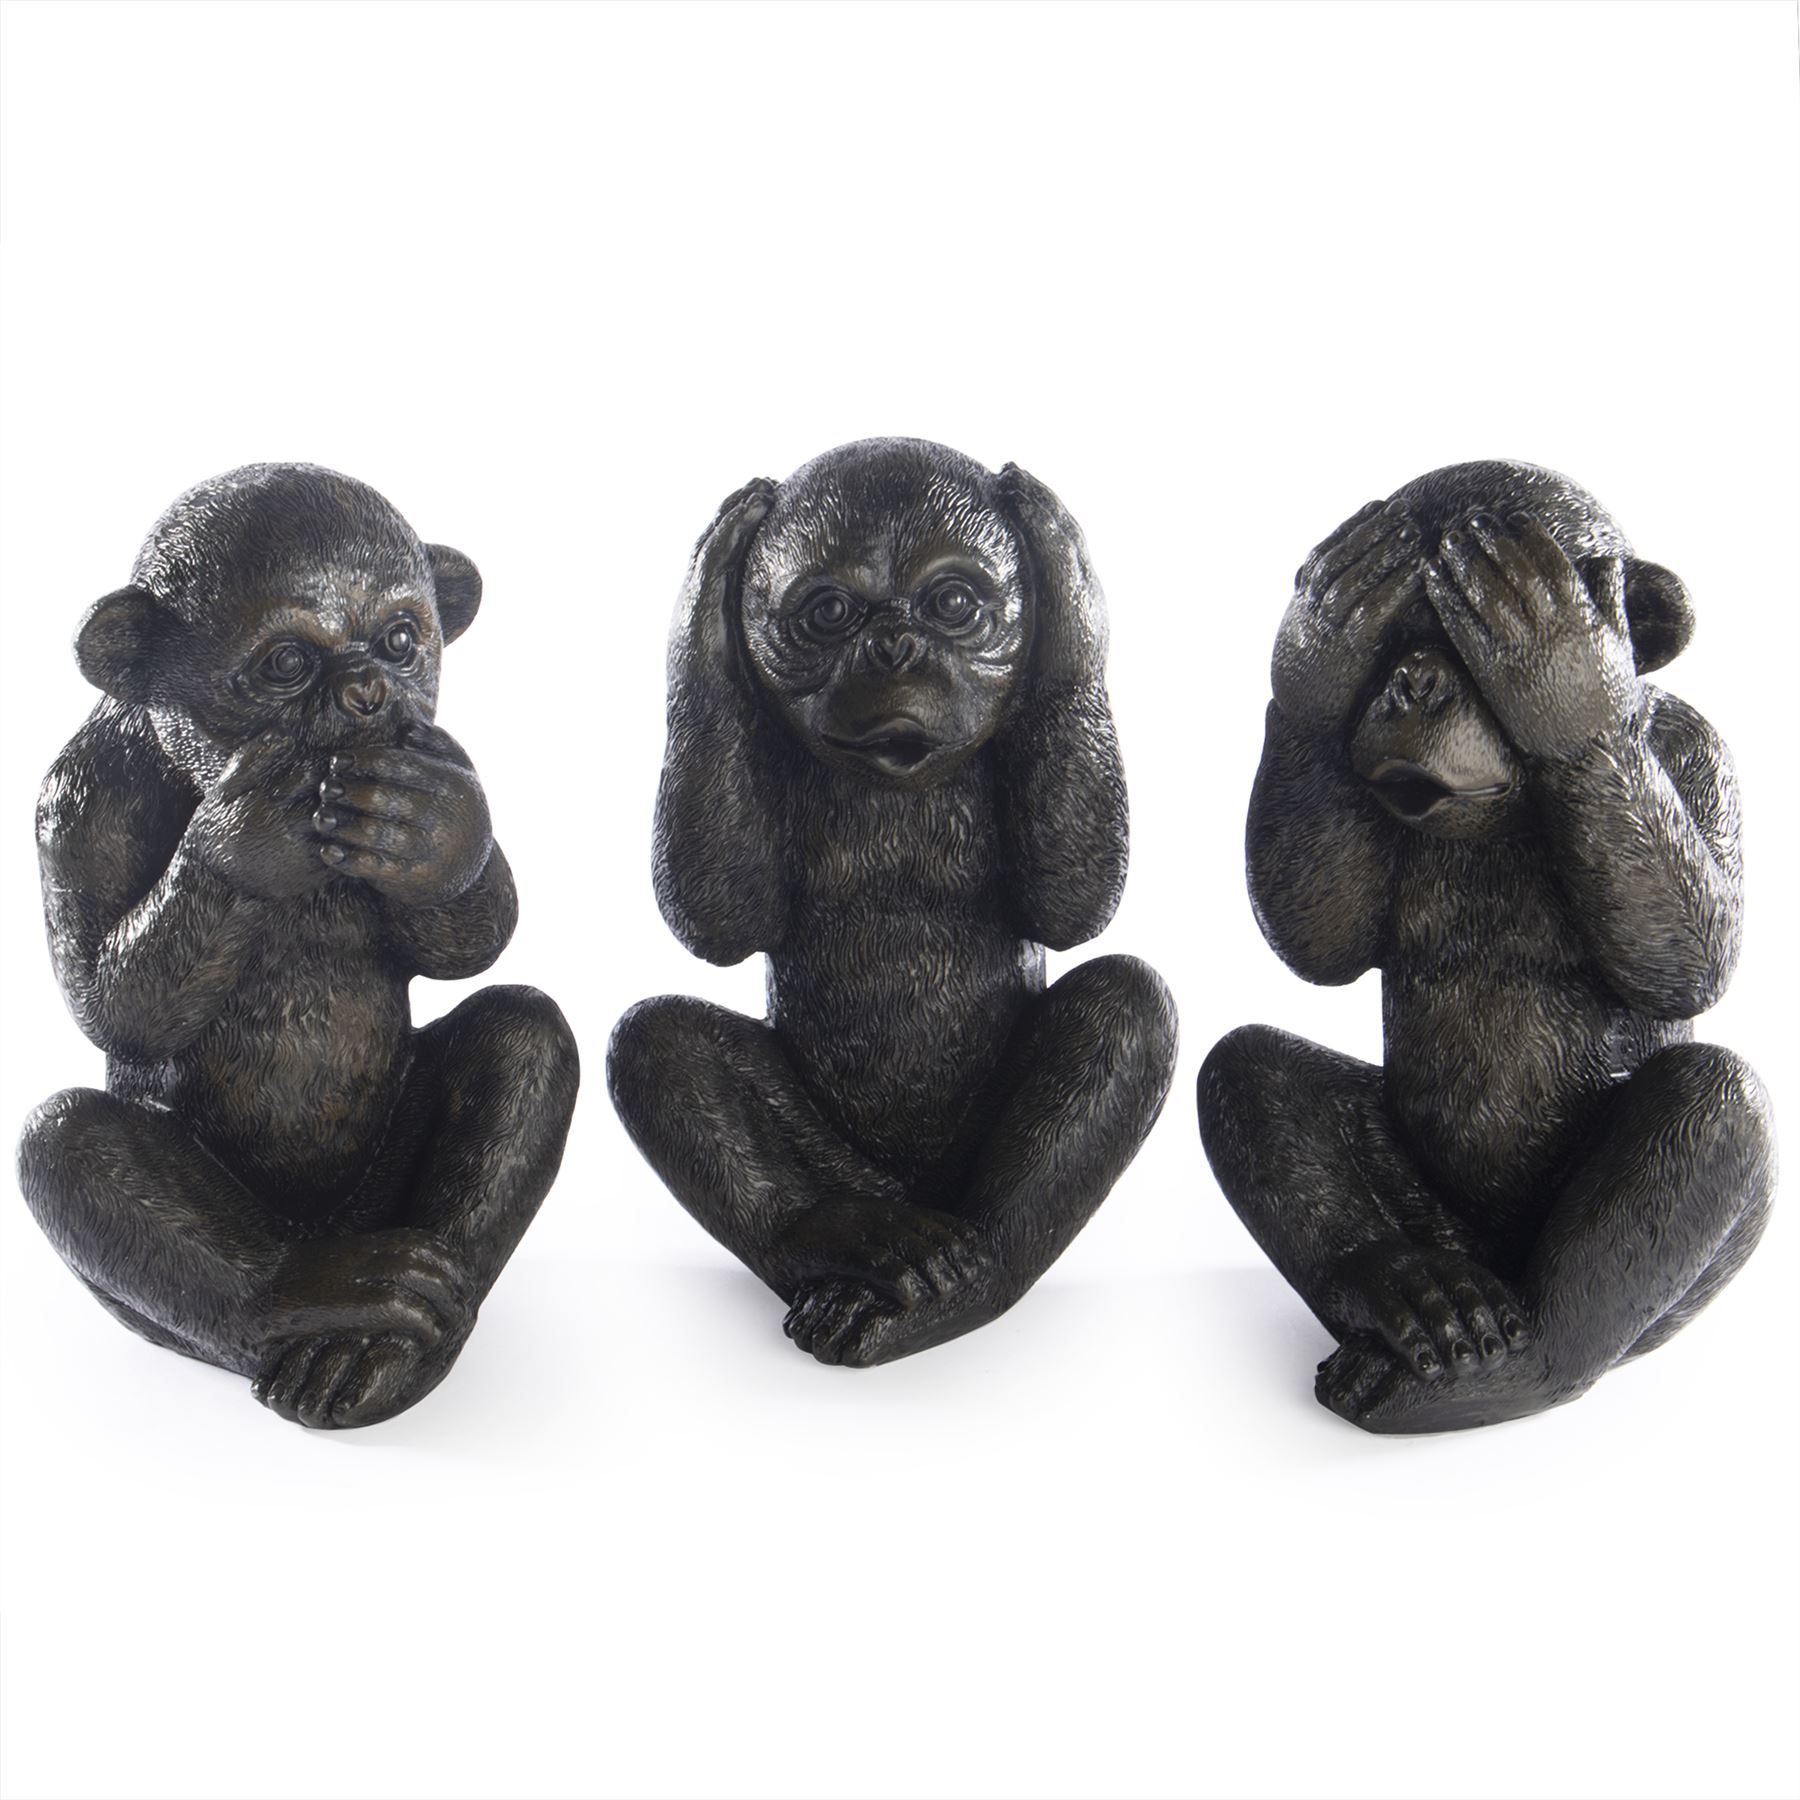 Wise Monkey Garden Ornaments - Set of 3 | M&W